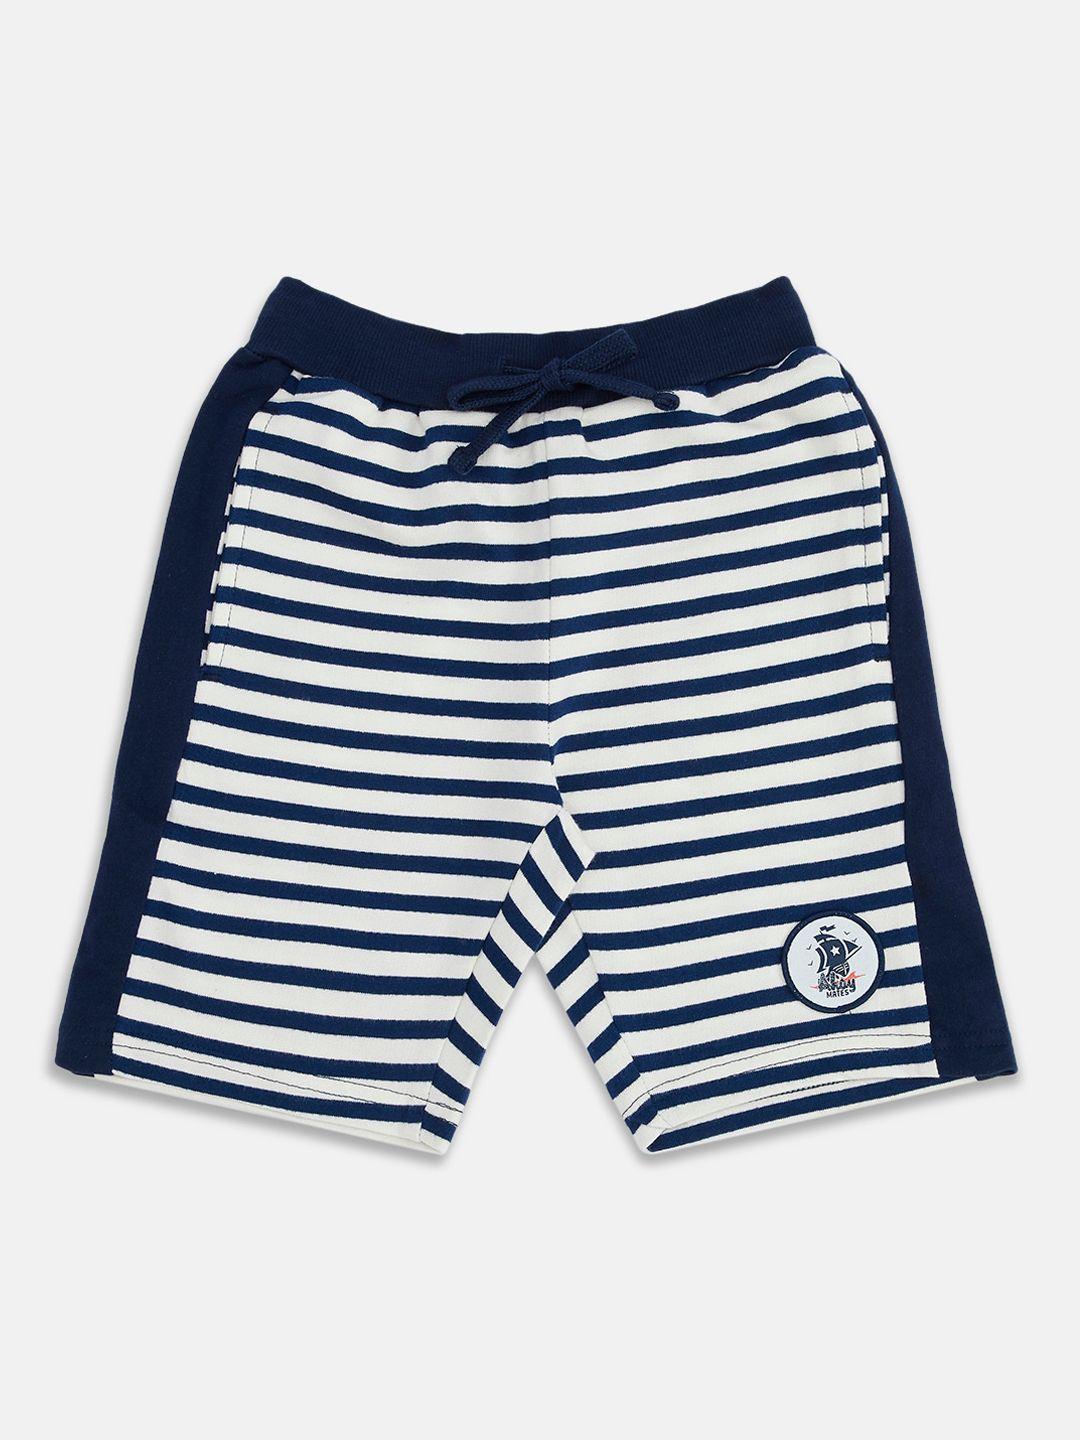 pantaloons junior boys navy blue striped cotton shorts